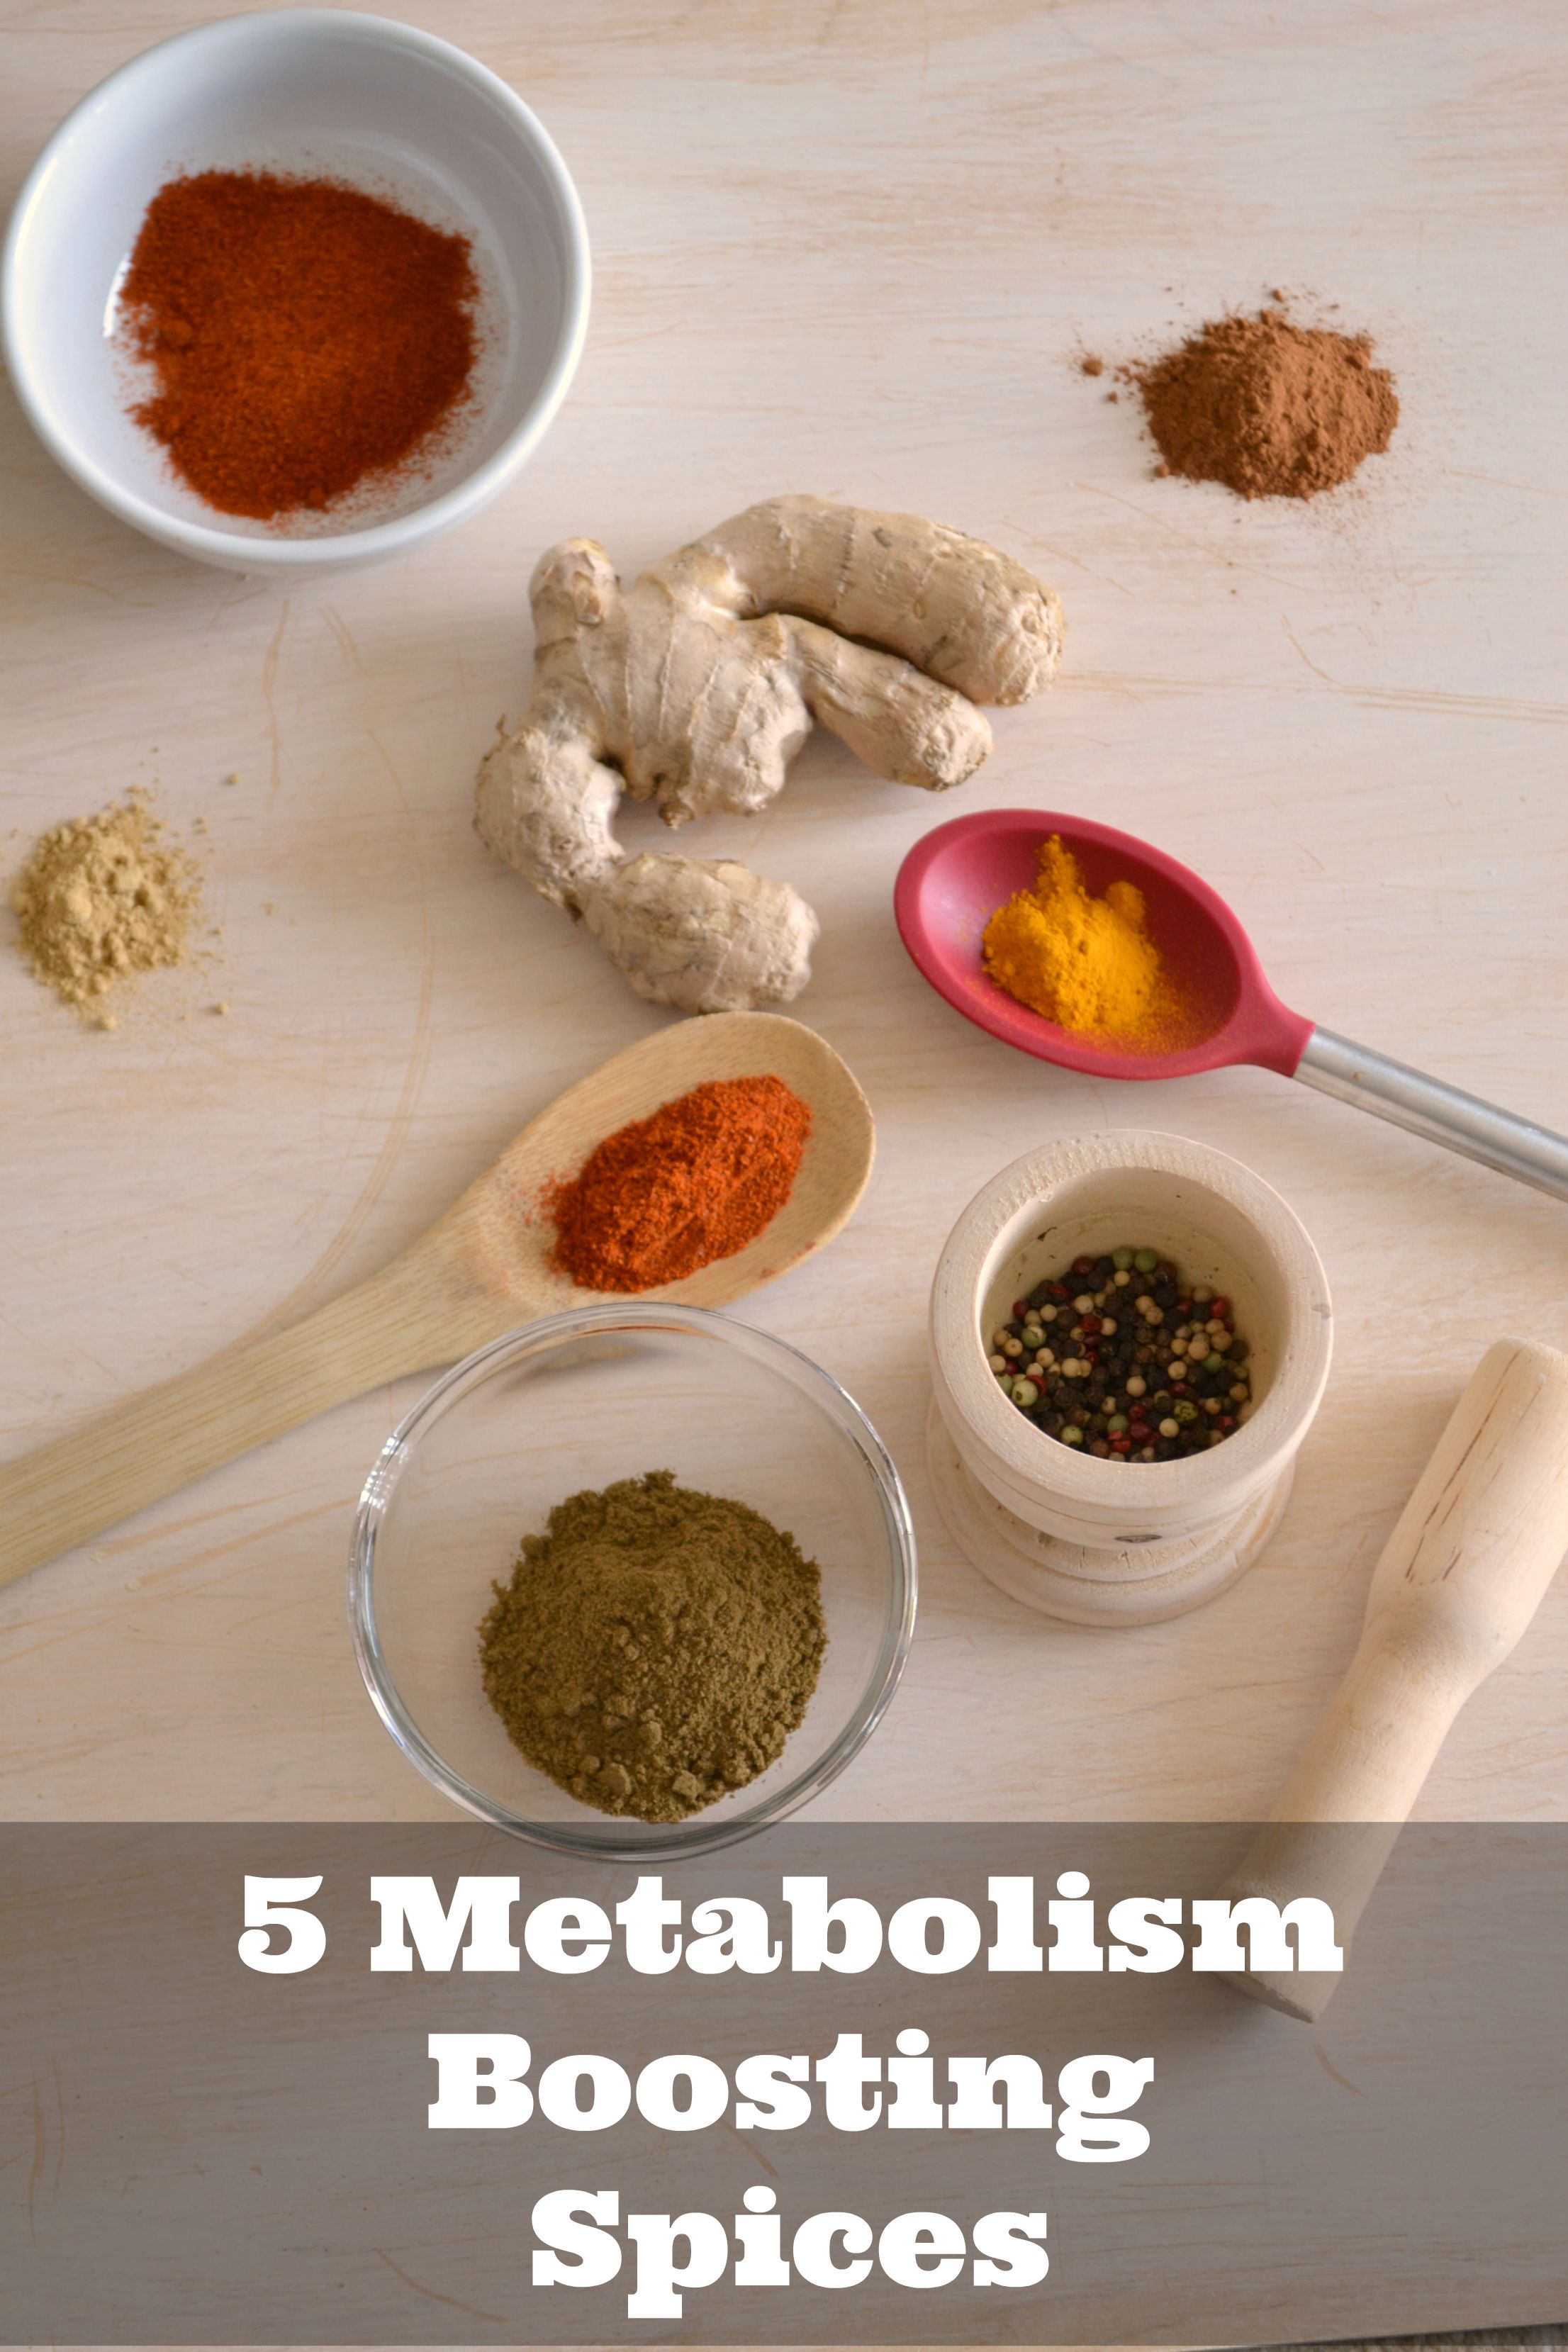 Metabolism boosting spices